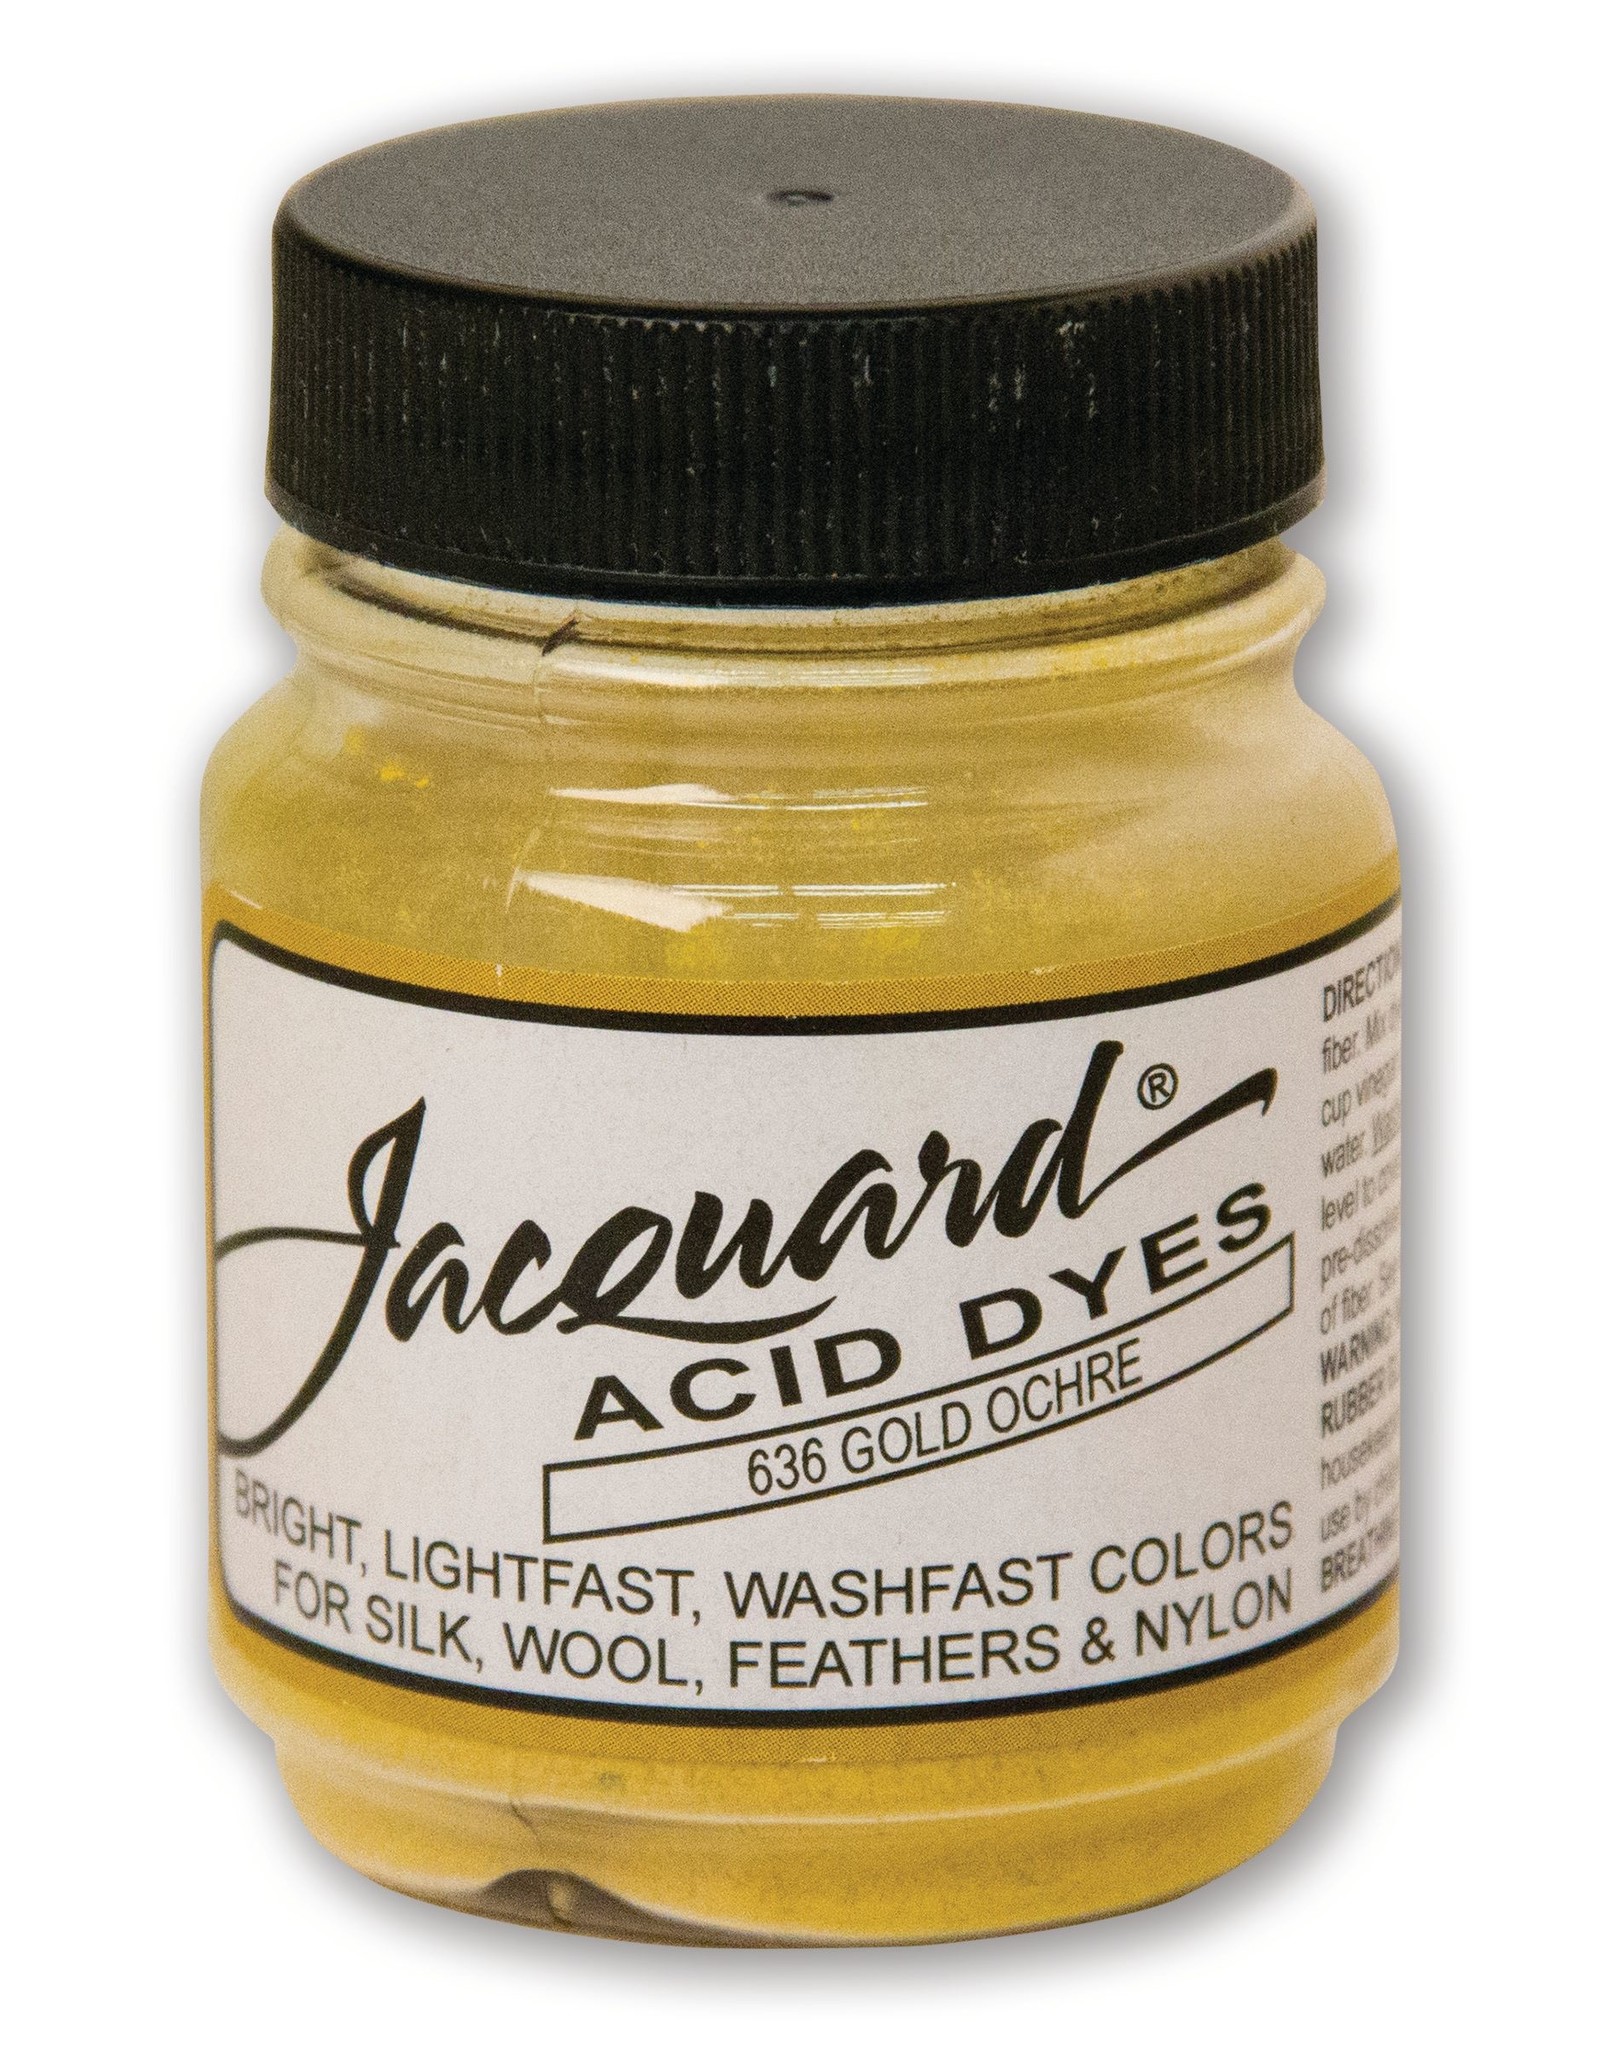 Jacquard Jacquard Acid Dye, #636 Gold Ochre ½oz